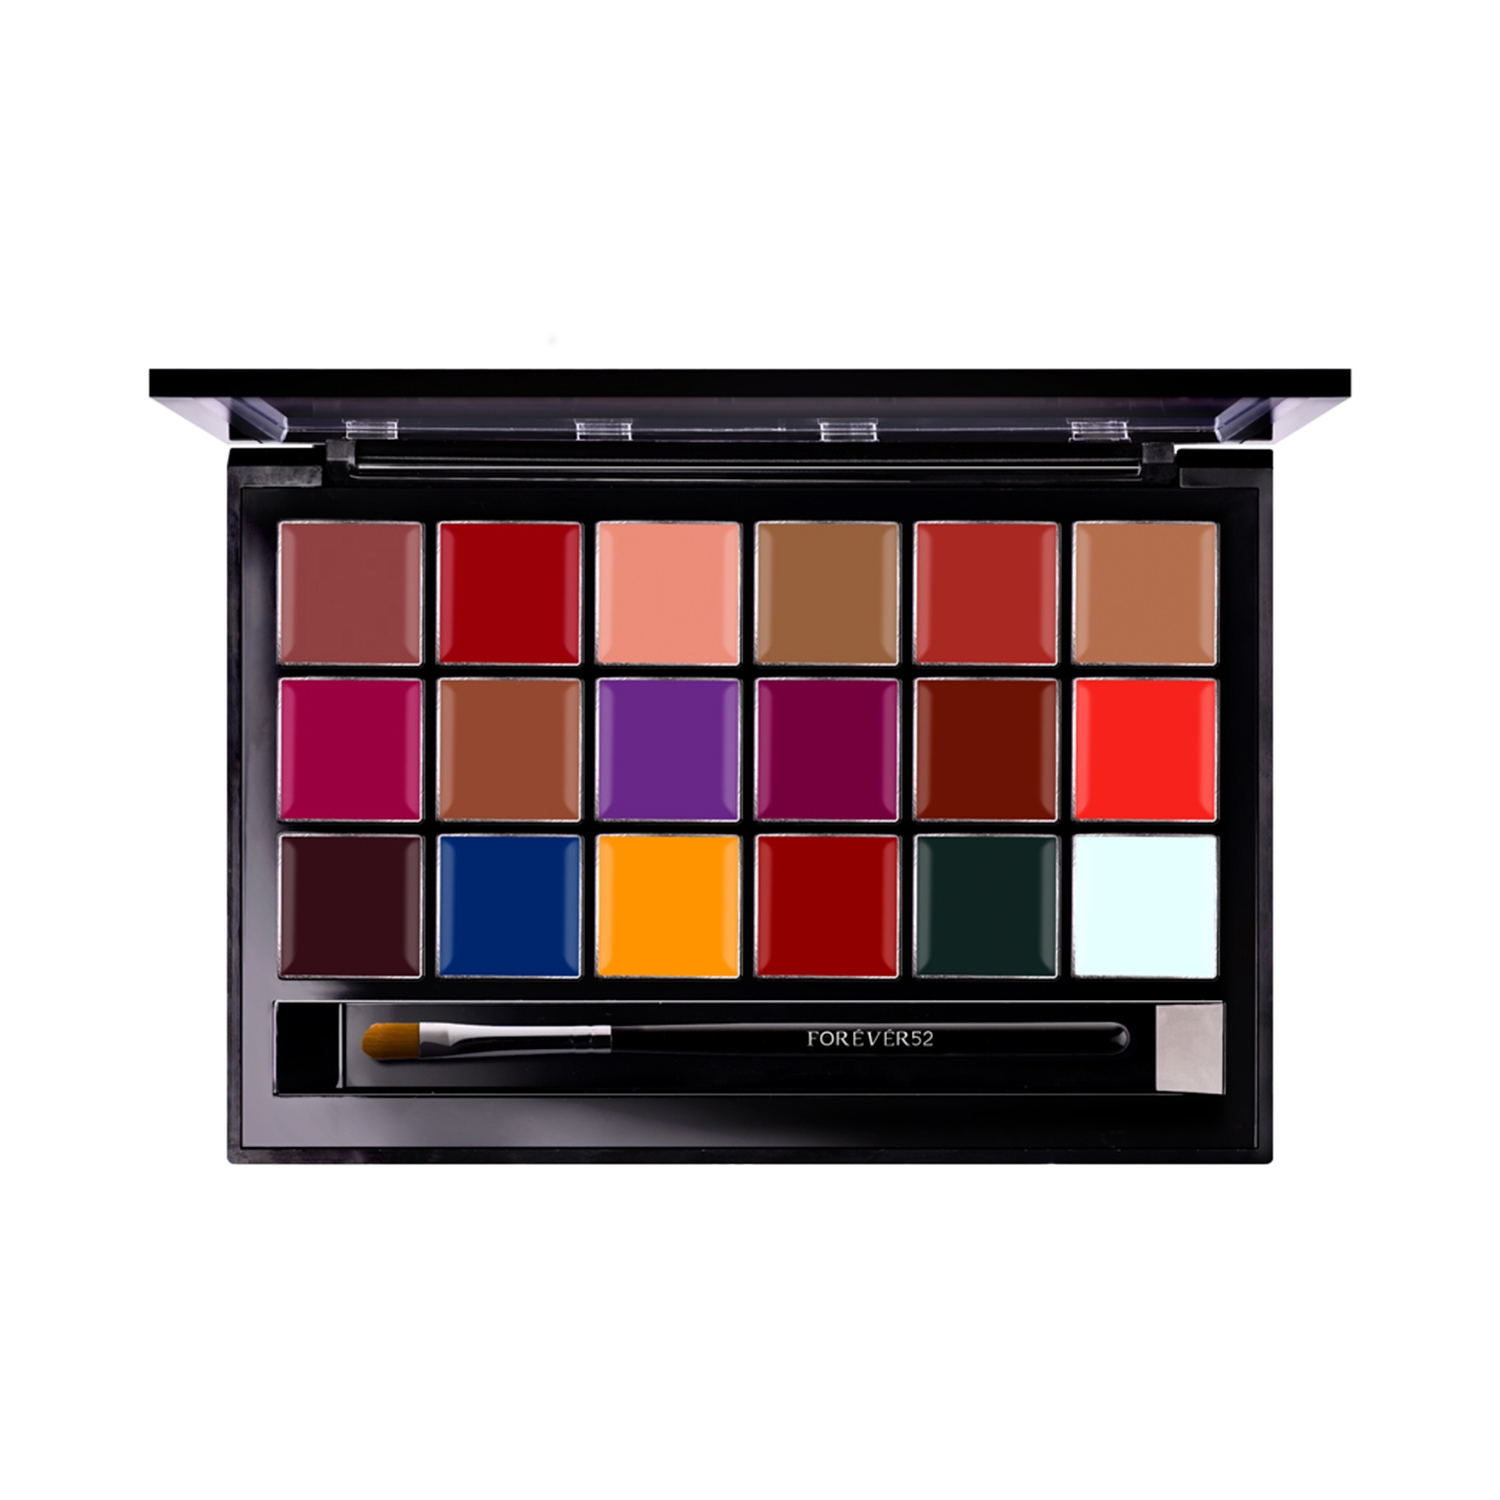 Daily Life Forever52 Pro Artist Multitasker Lipstick Palette MPL001 - Multi  Color (36g)